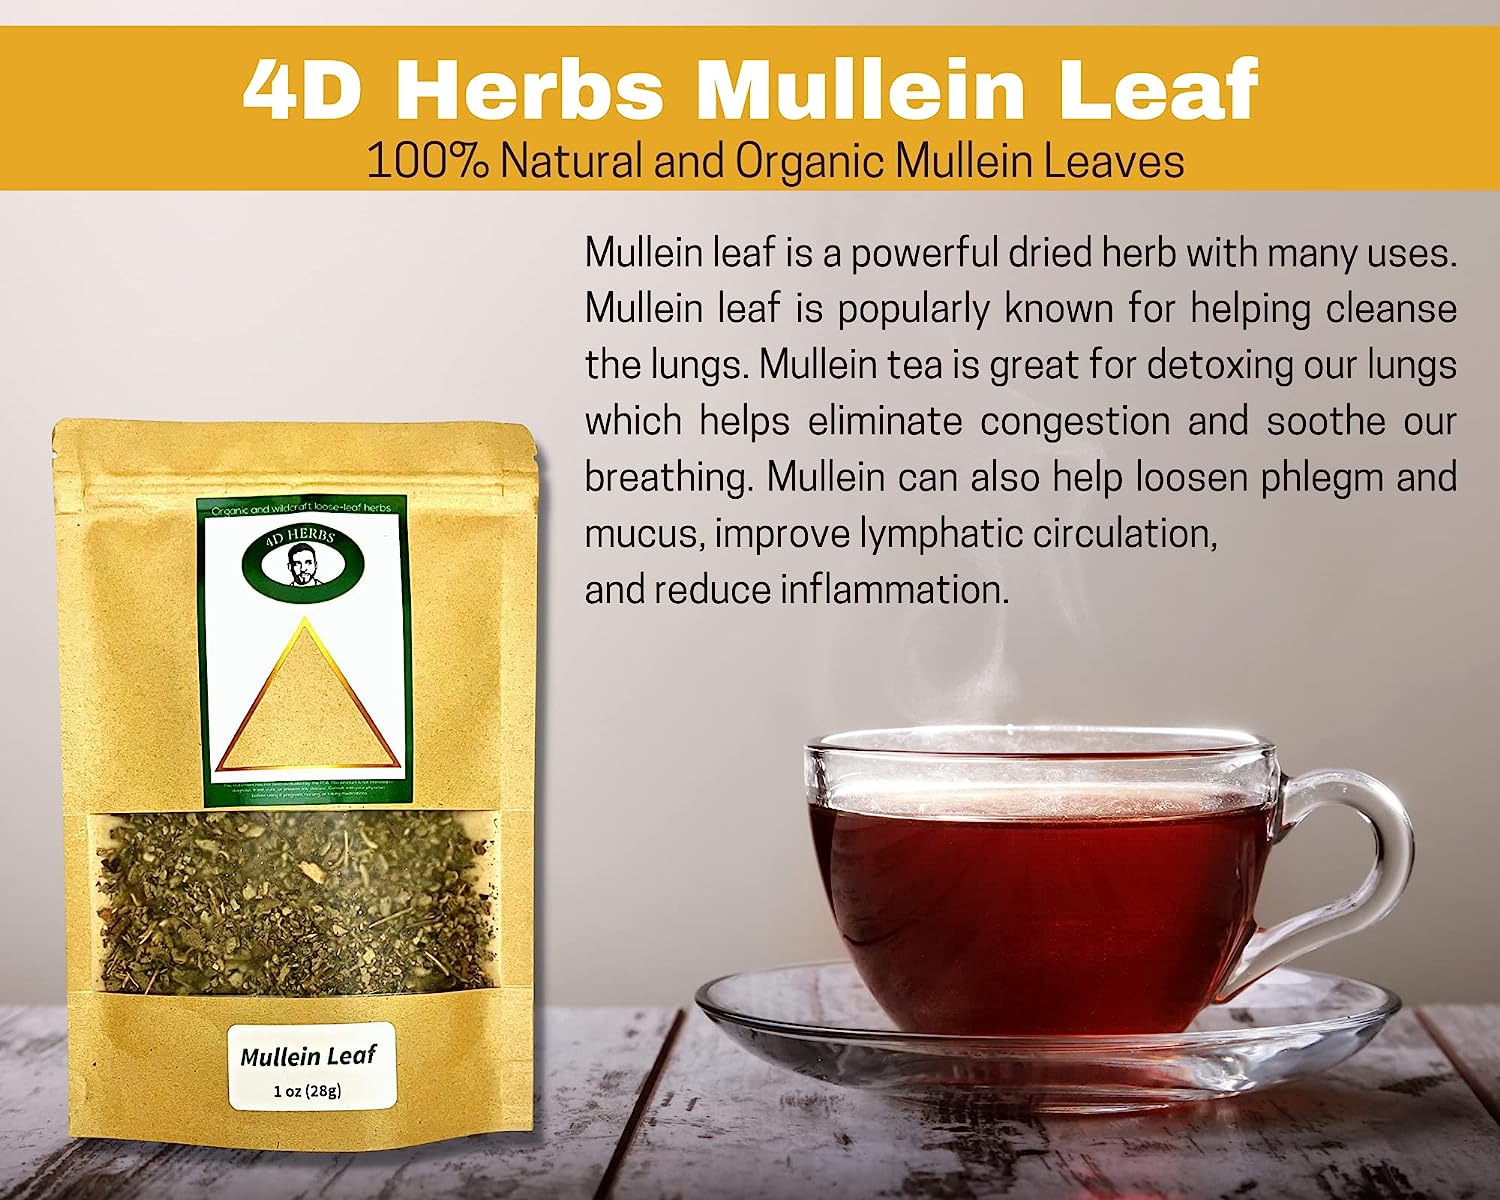 4D Herbs Mullein Leaf